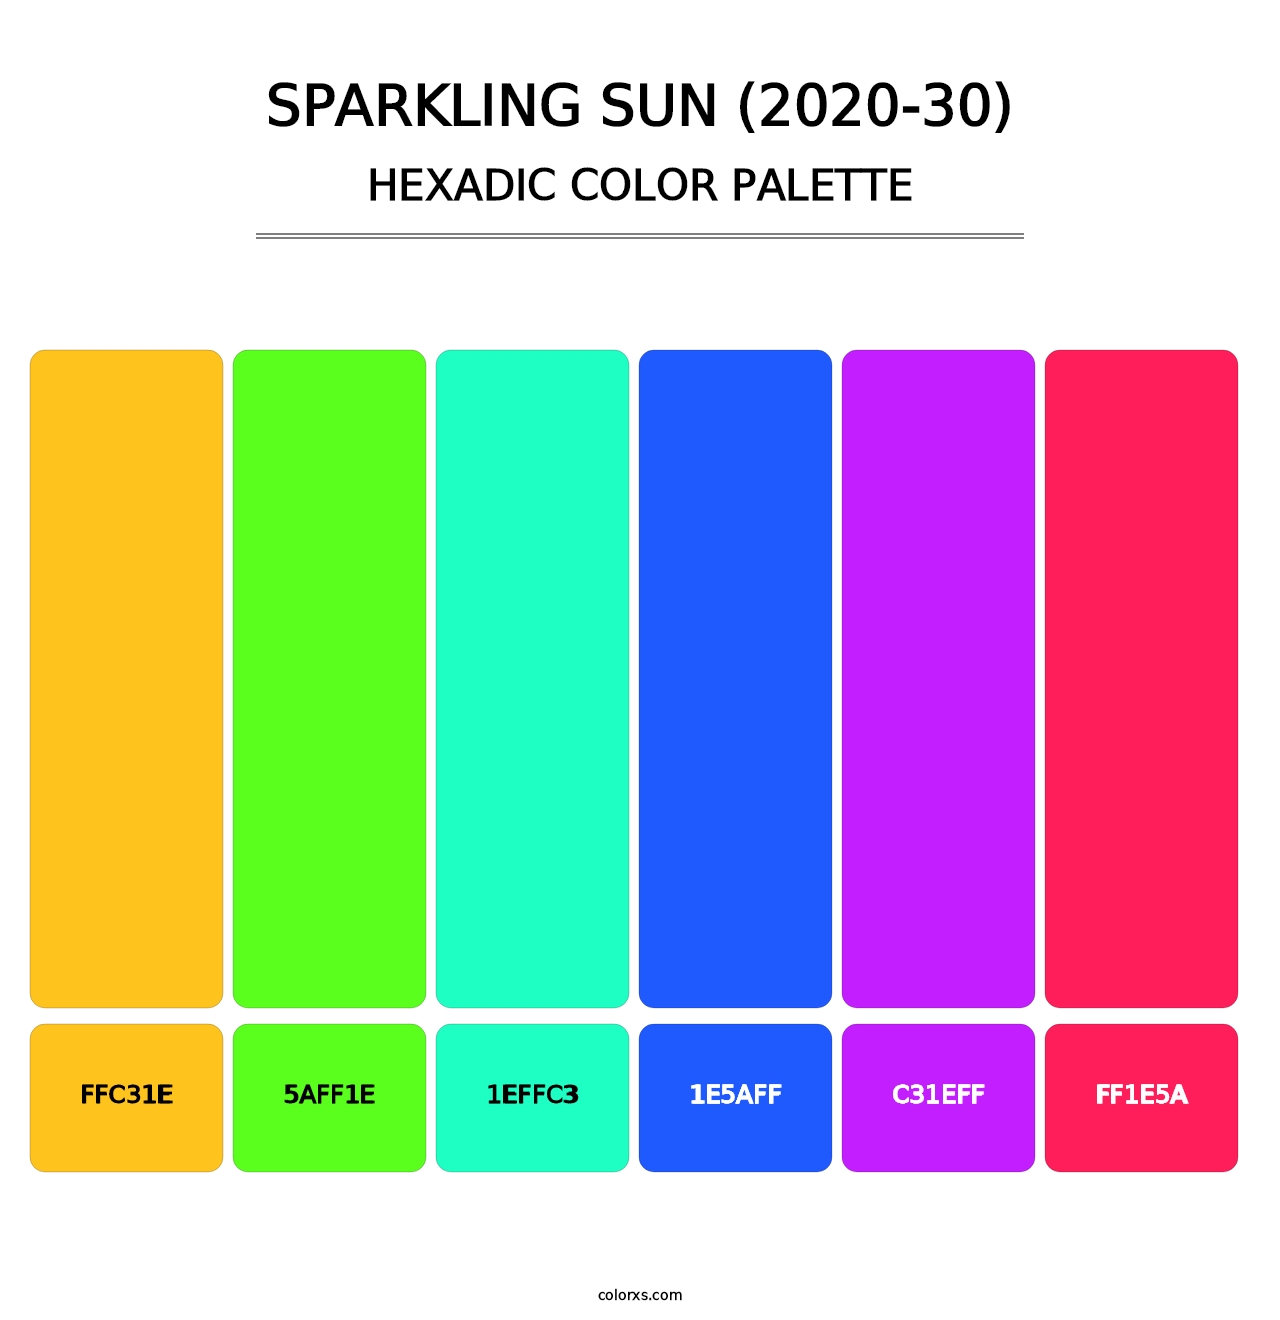 Sparkling Sun (2020-30) - Hexadic Color Palette